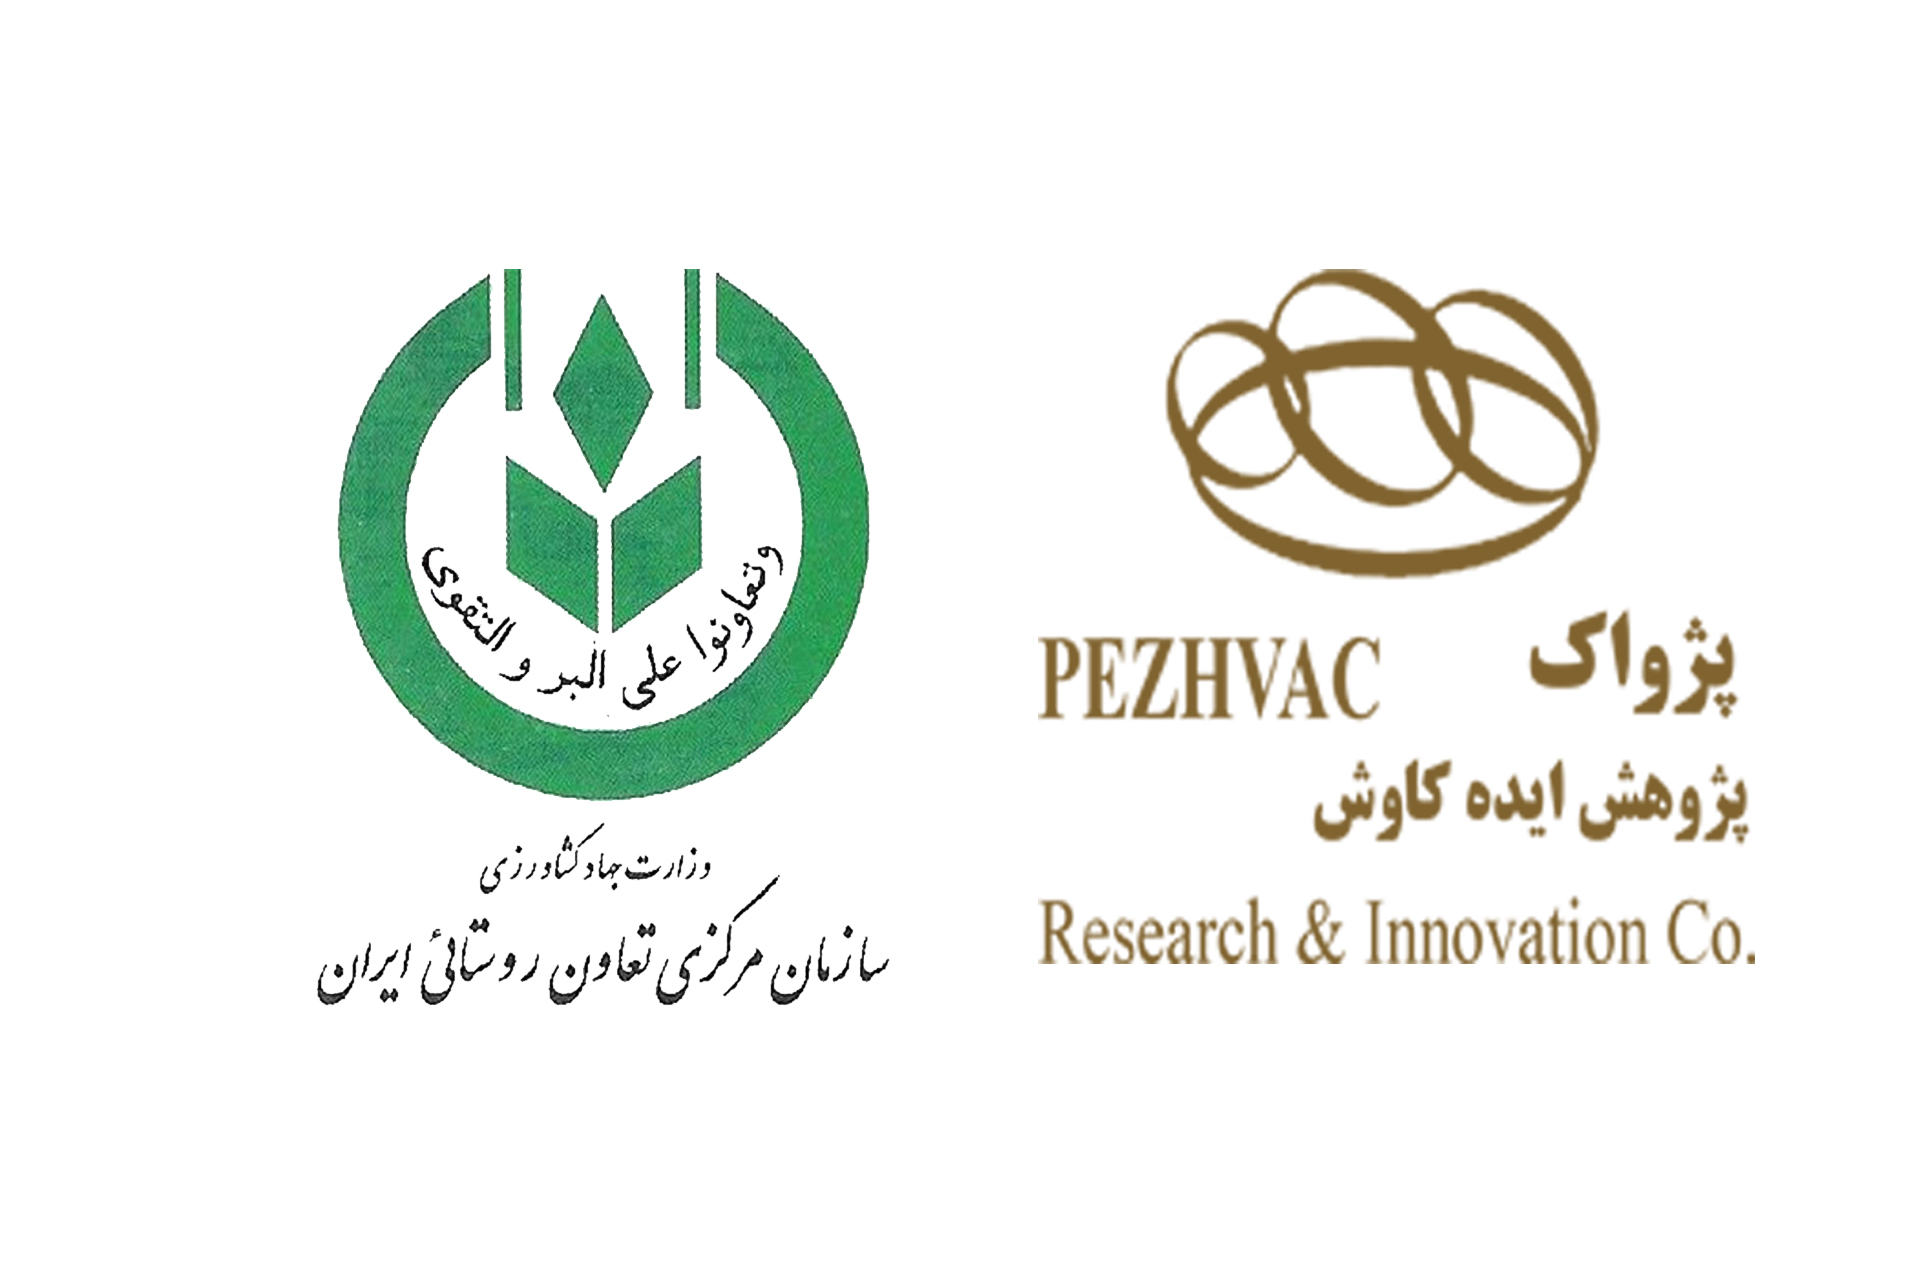 Memorandum of Understanding In Enhancing Network Cooperatives and Rural Organizations Covered by the Central Organization for Rural Cooperatives of Iran (CORC) (Apr 2017)